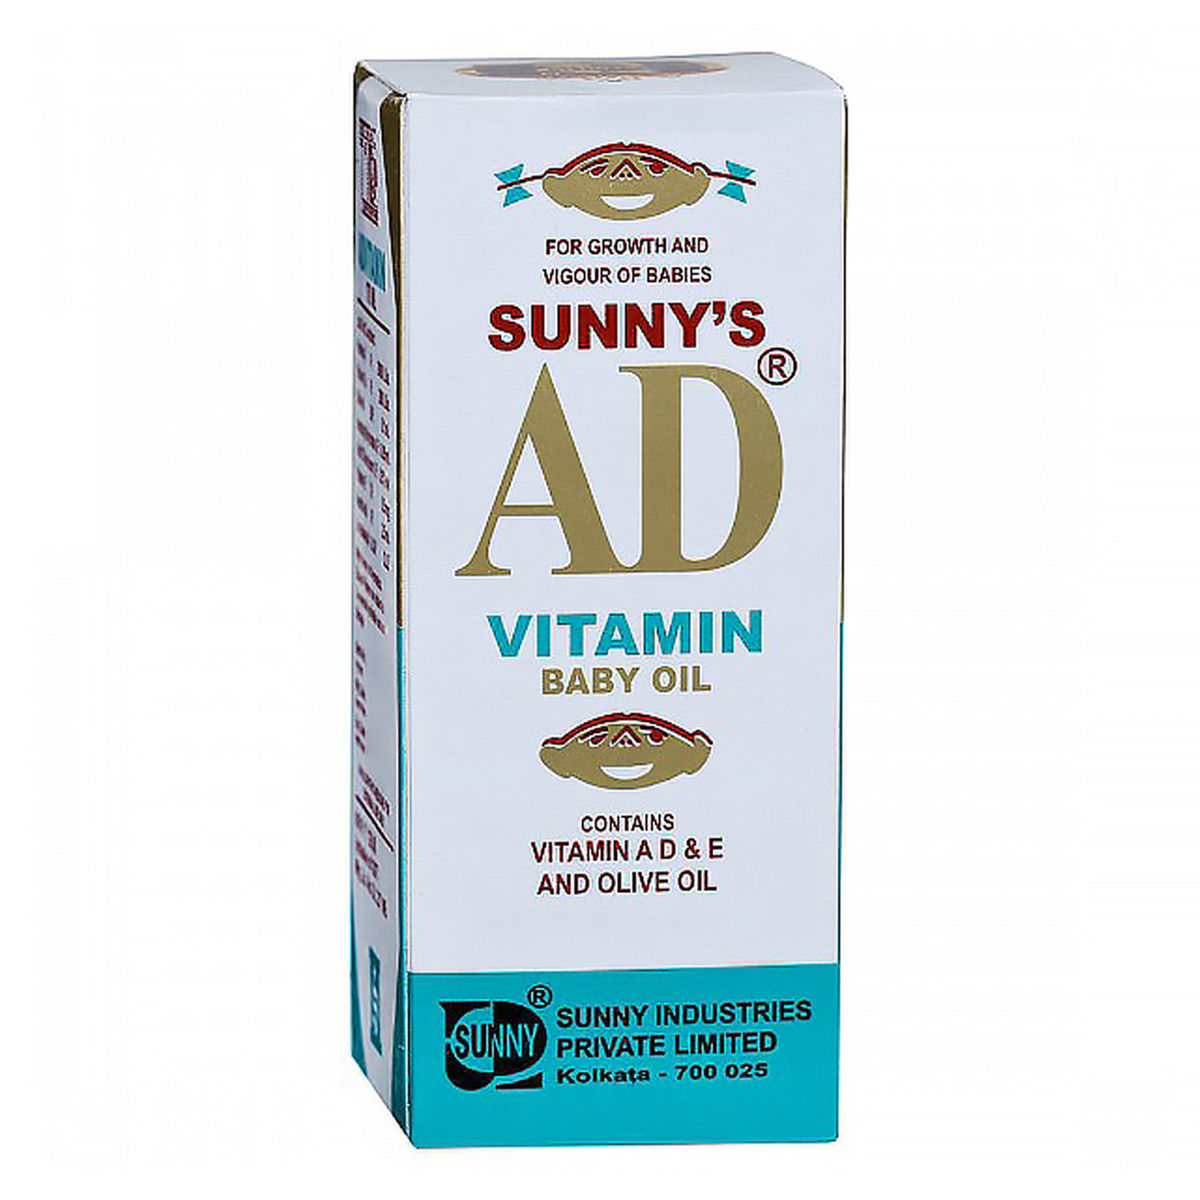 Buy Sunny's AD Vitamin Baby Oil, 170 ml Online